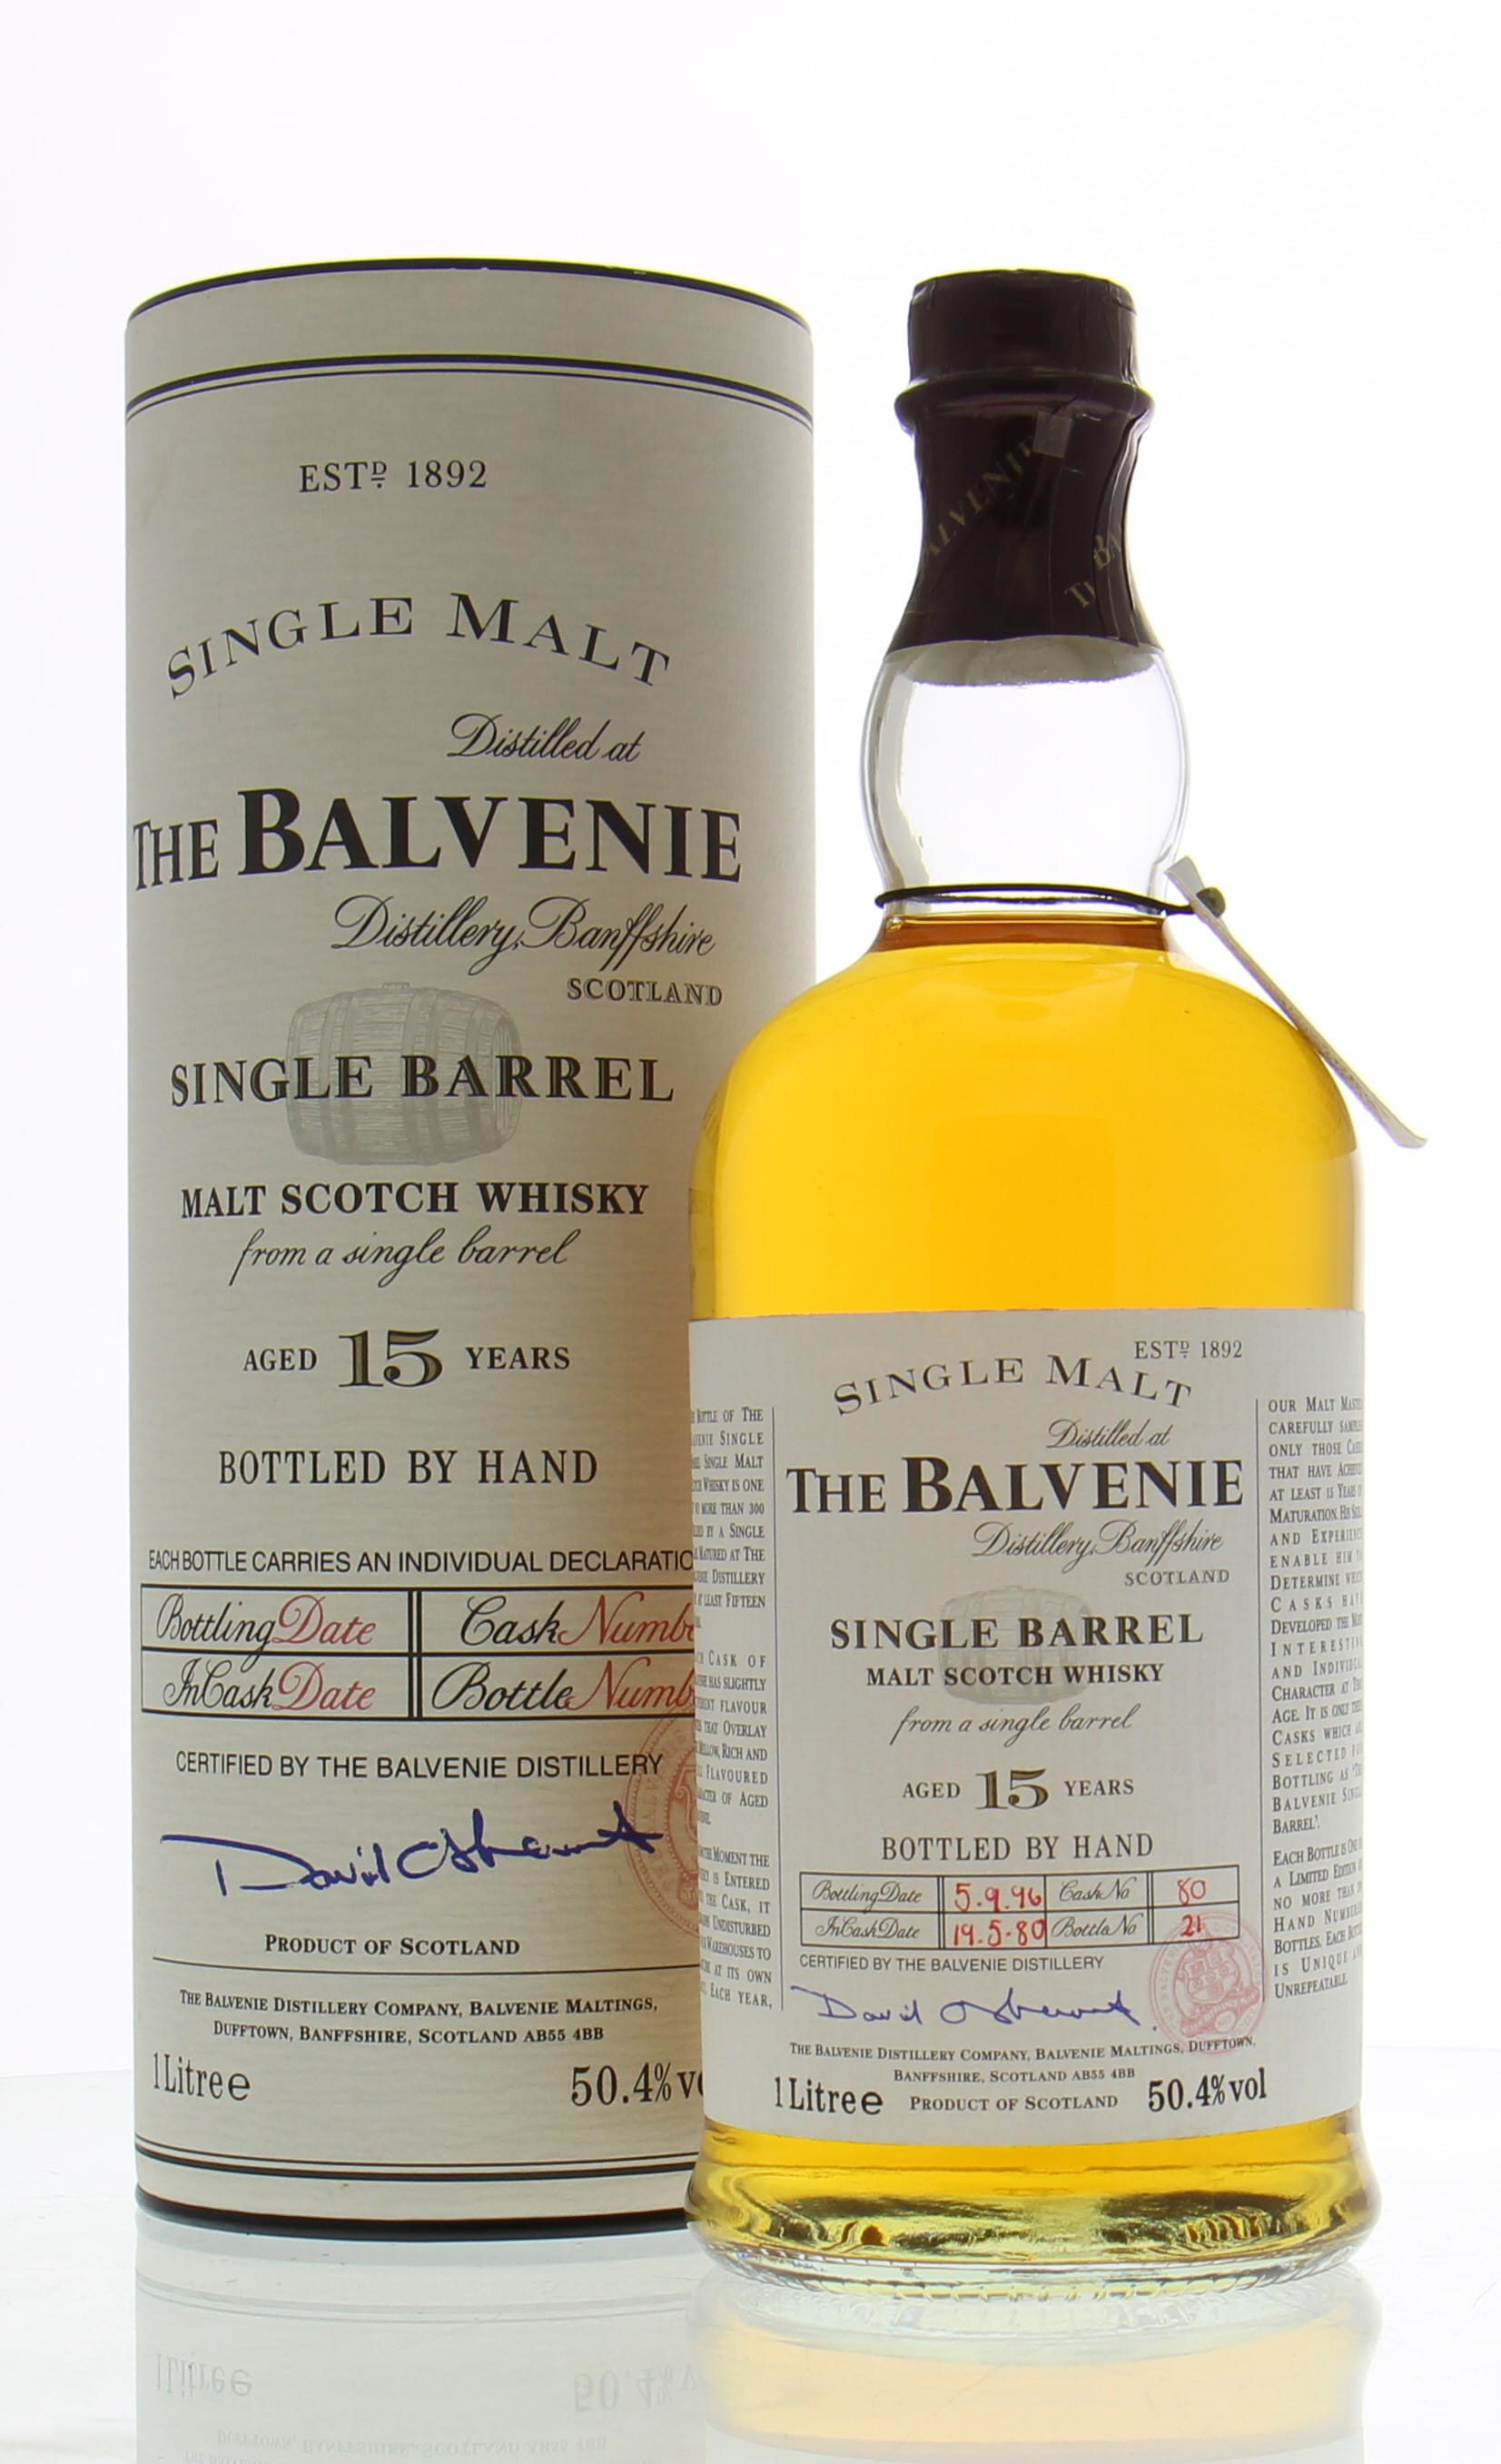 Balvenie 15 Years Old Single Barrel Cask 9018 1995; Buy, 52% OFF